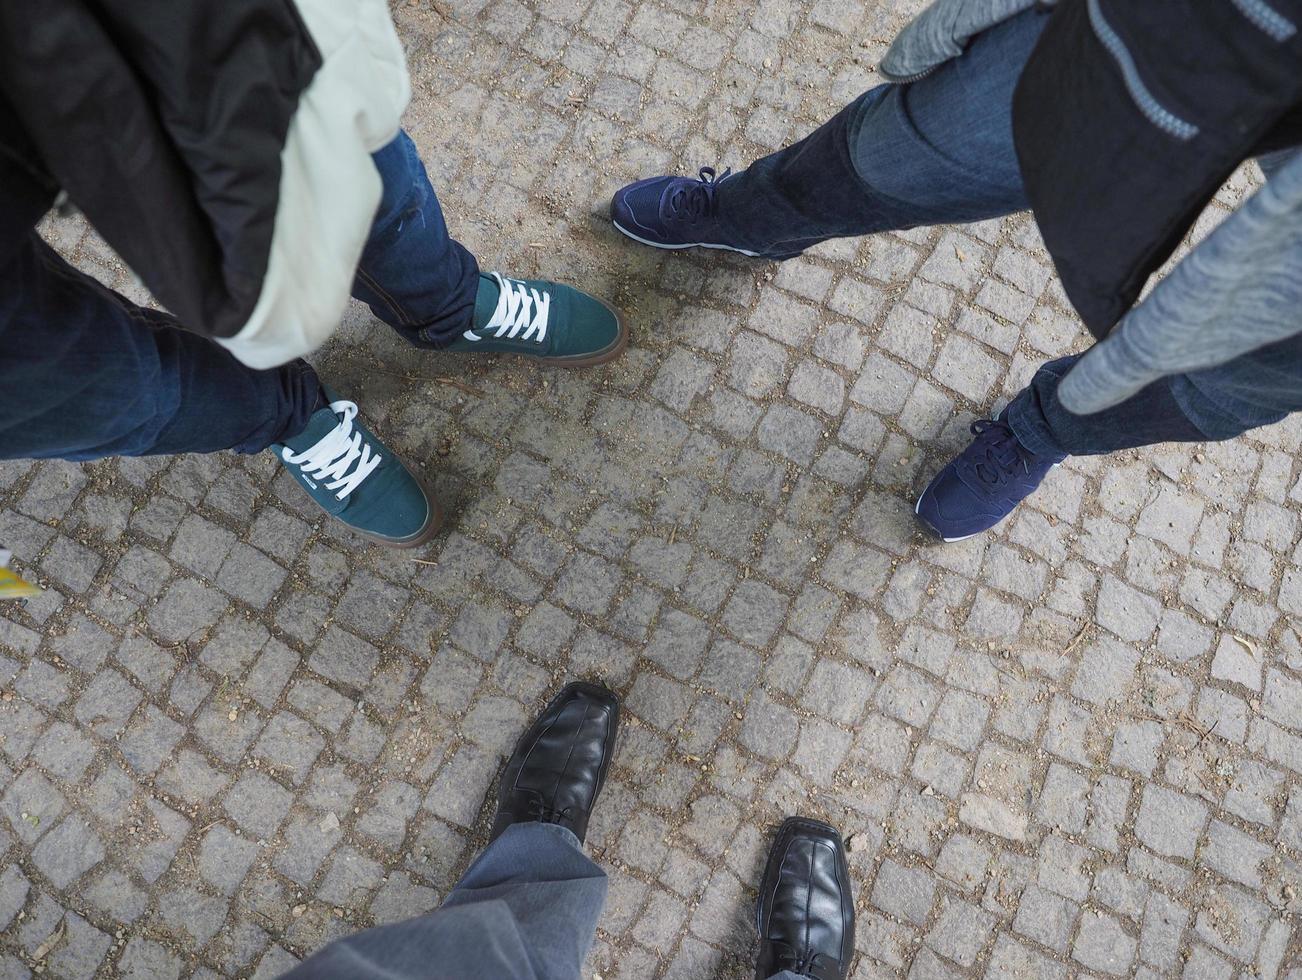 tre personers fötter foto